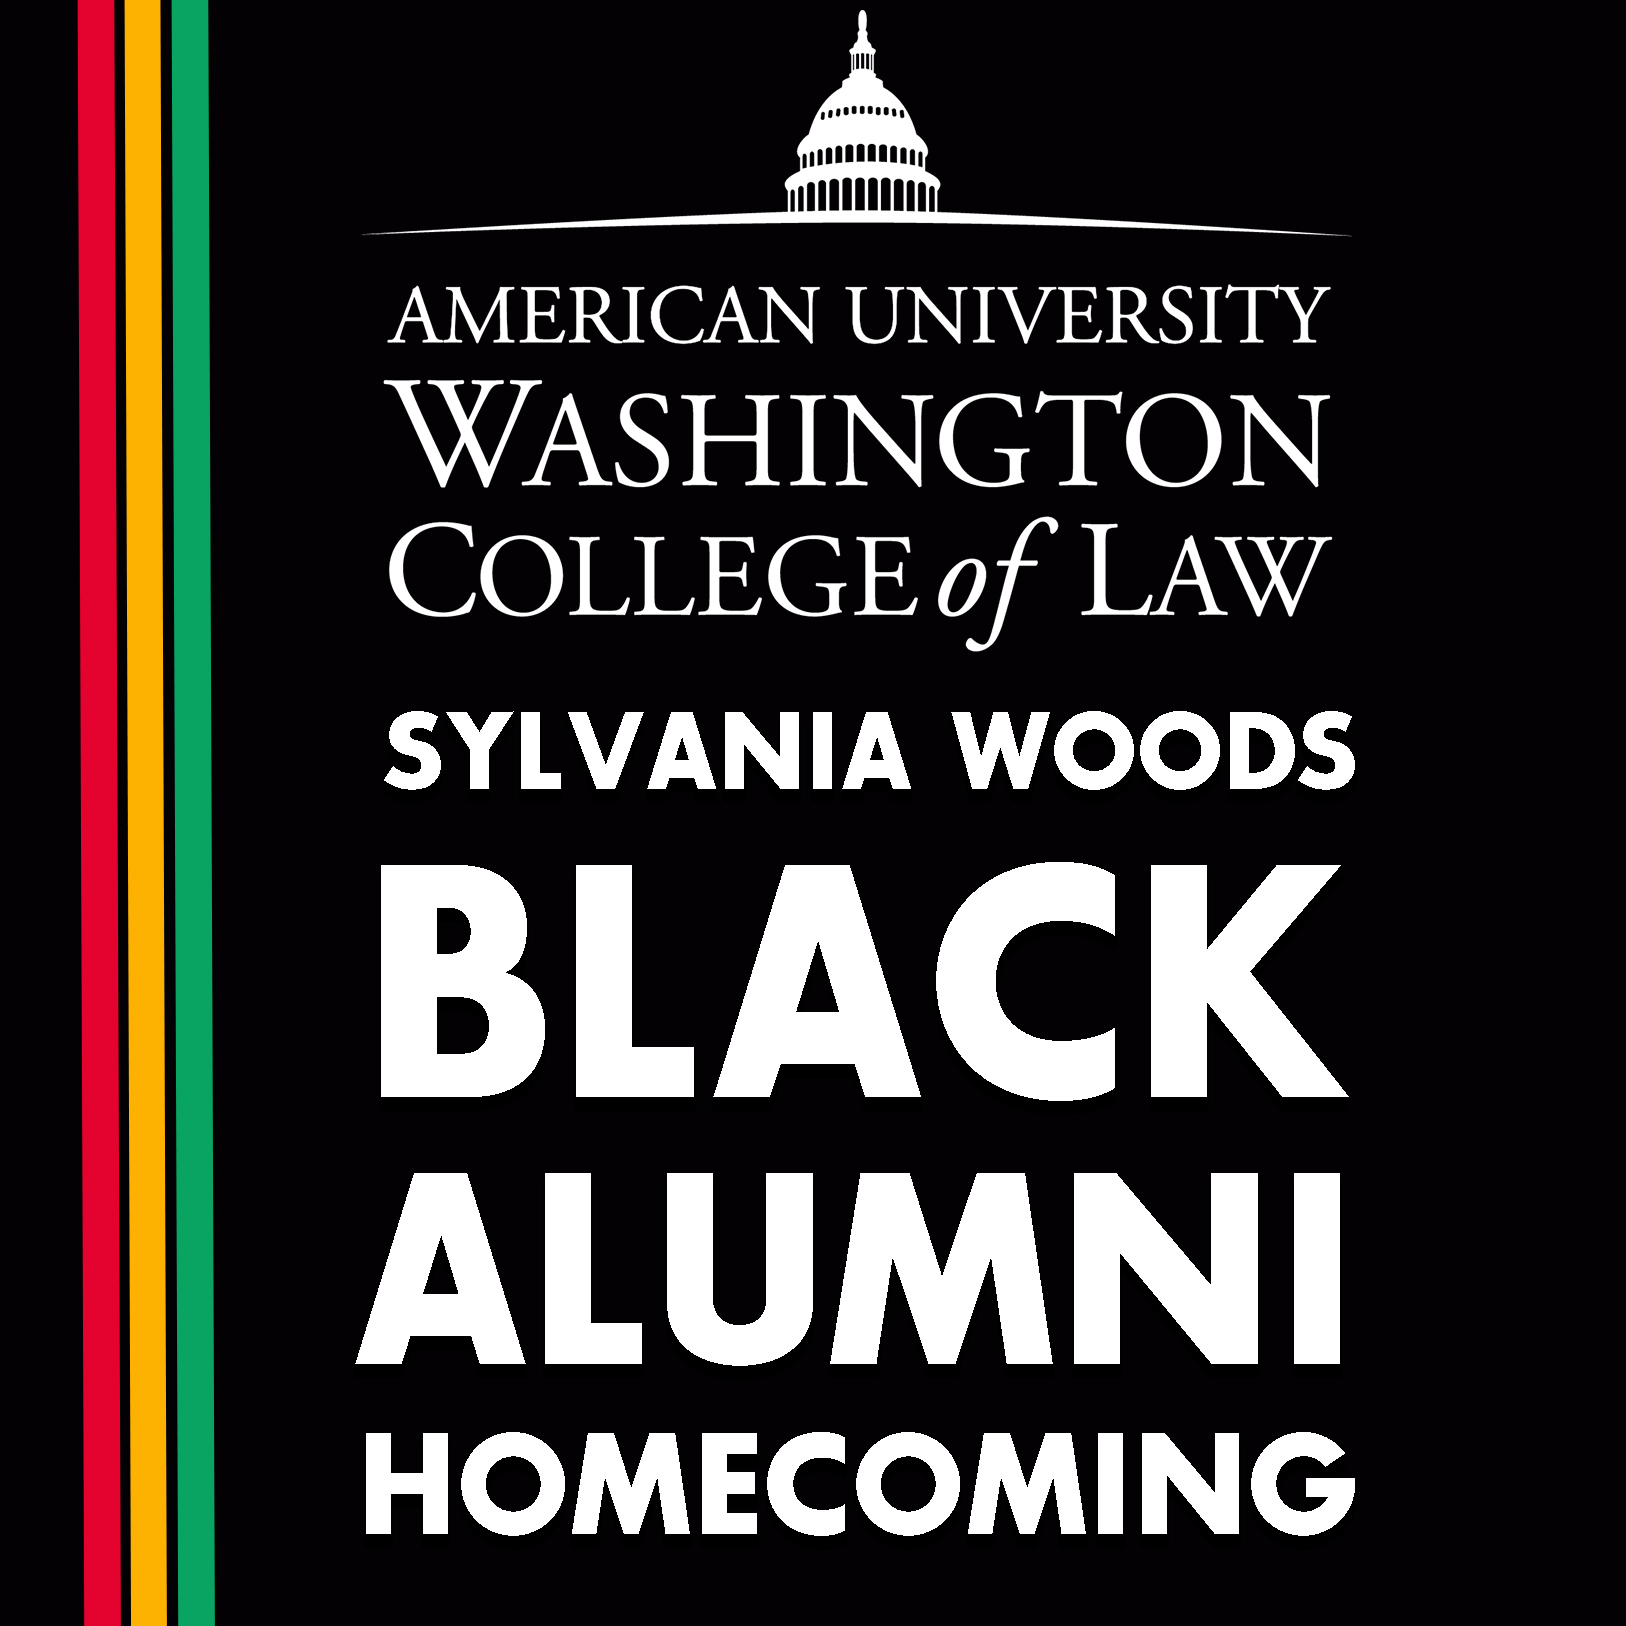 Sylvania Woods Black Alumni Homecoming